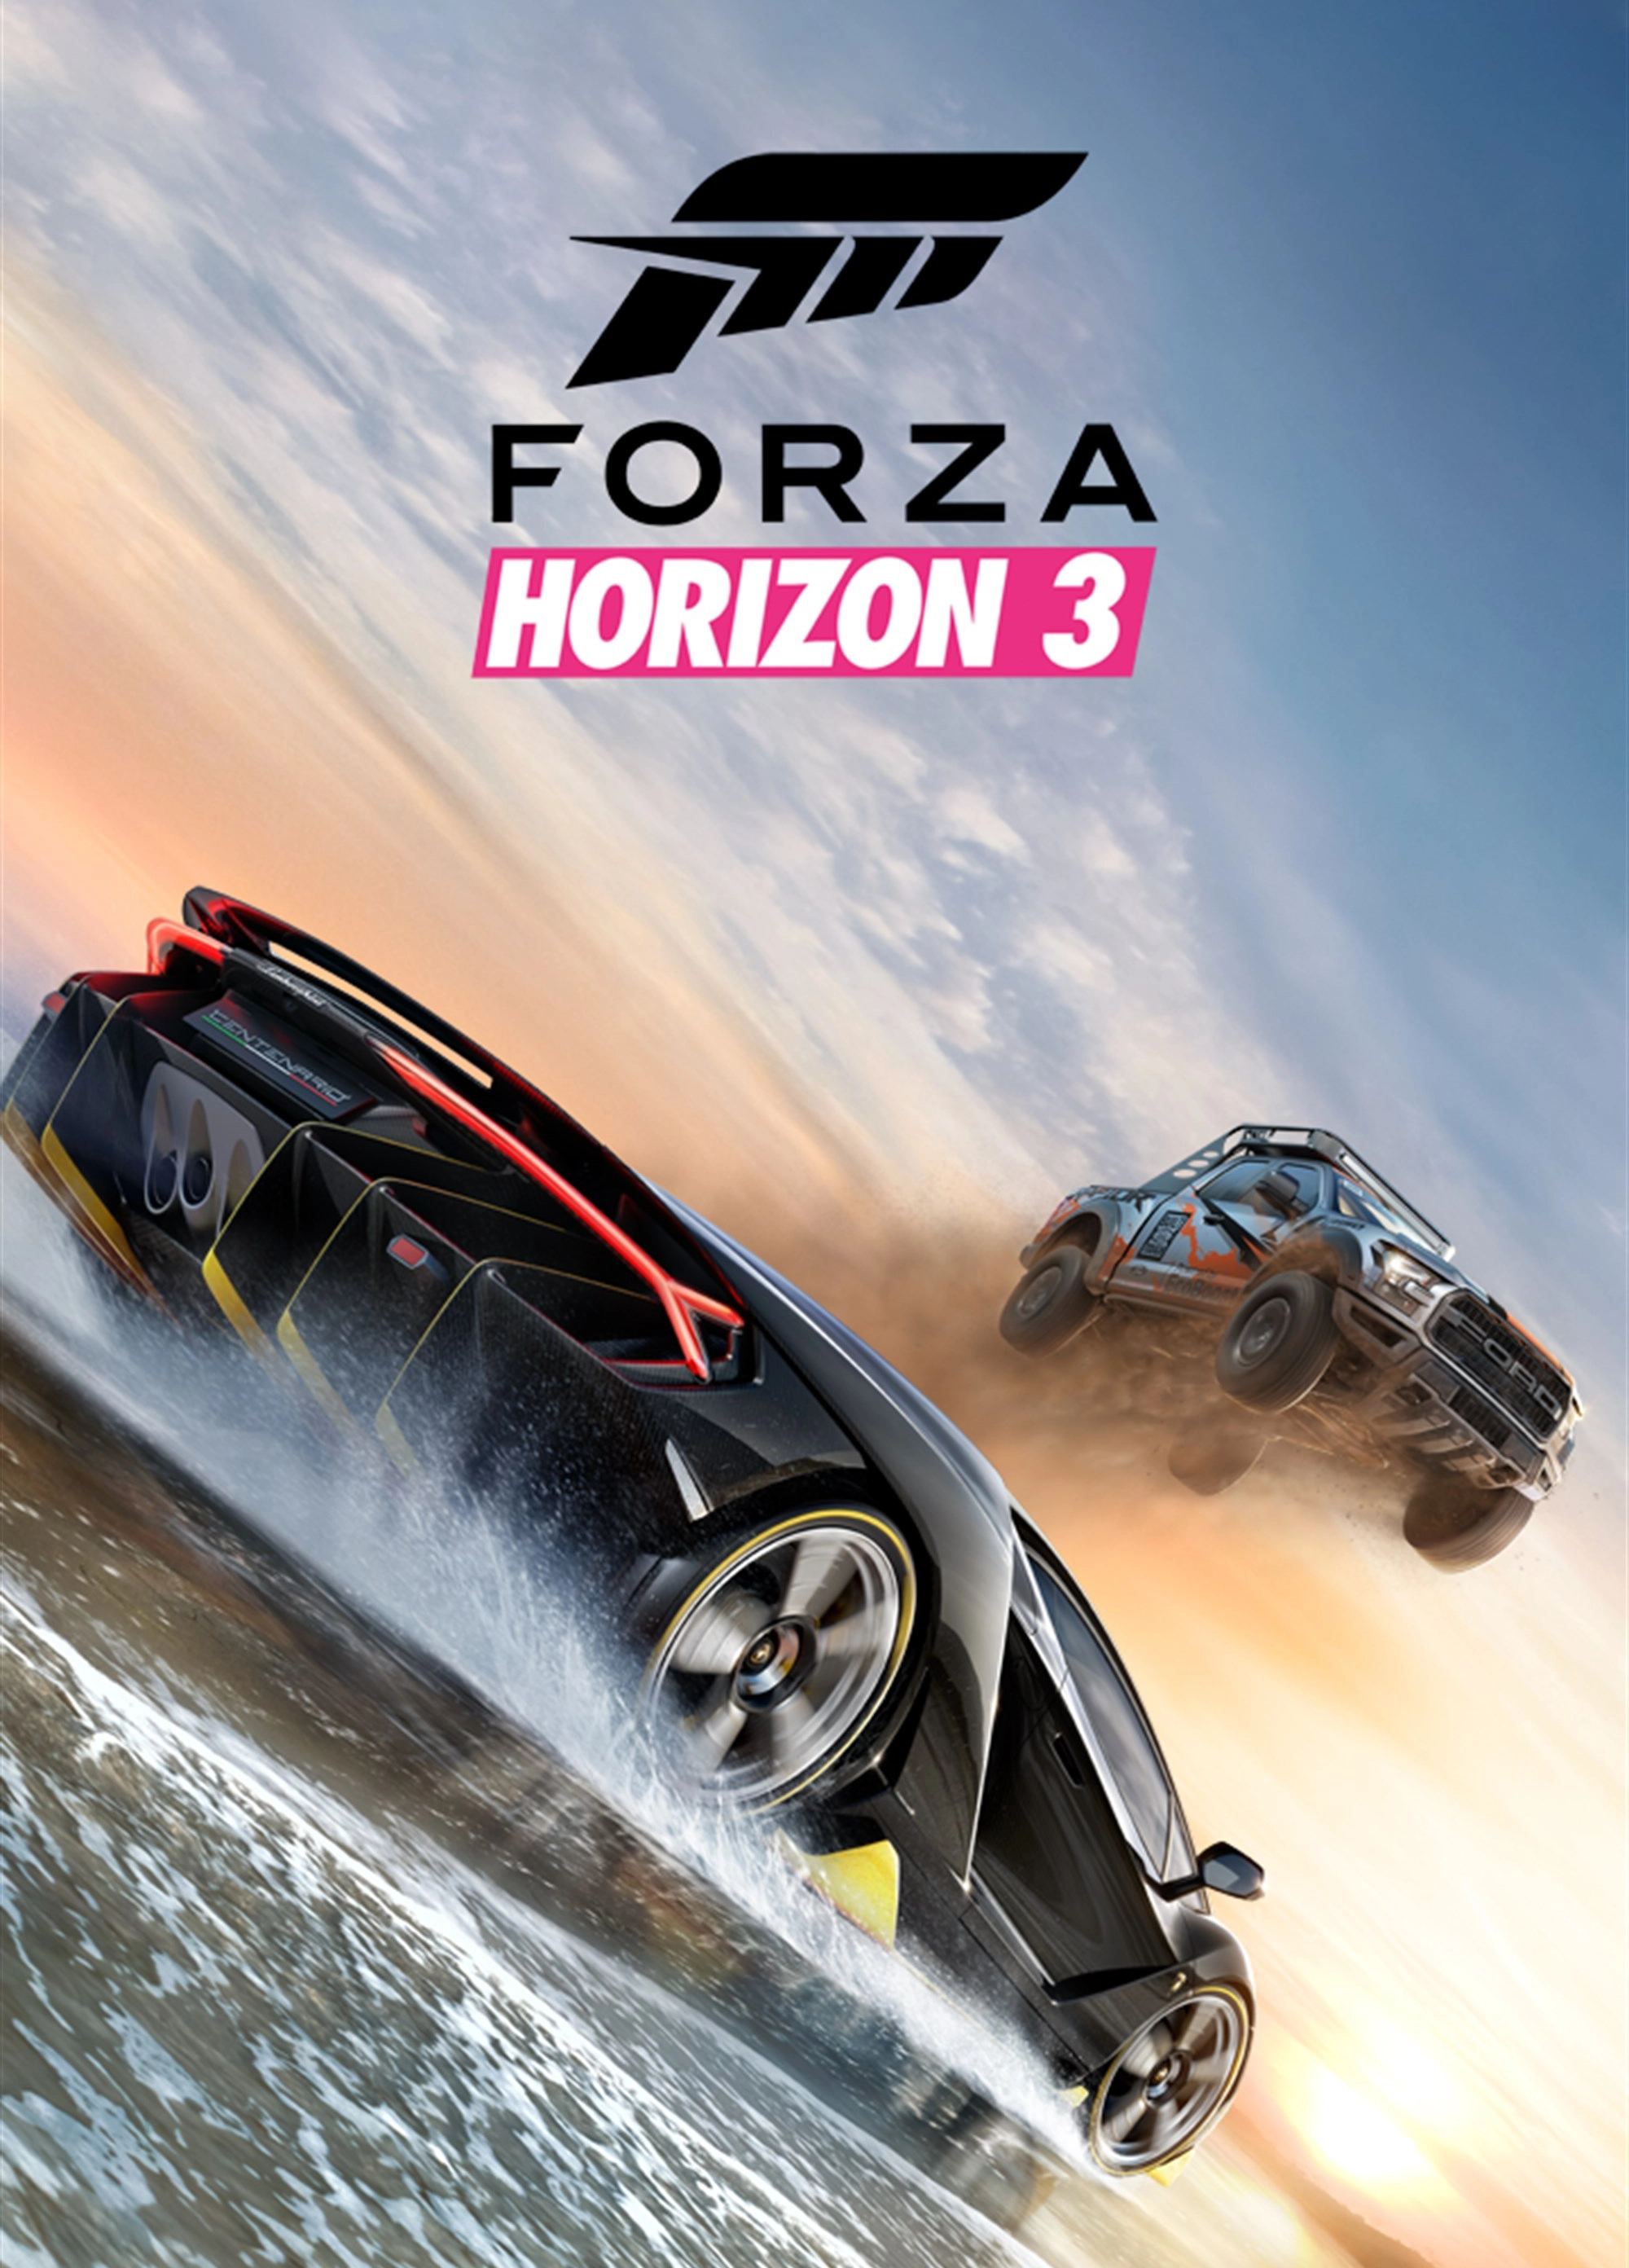 Forza Horizon 3 Free Download (v1.0.125.2)